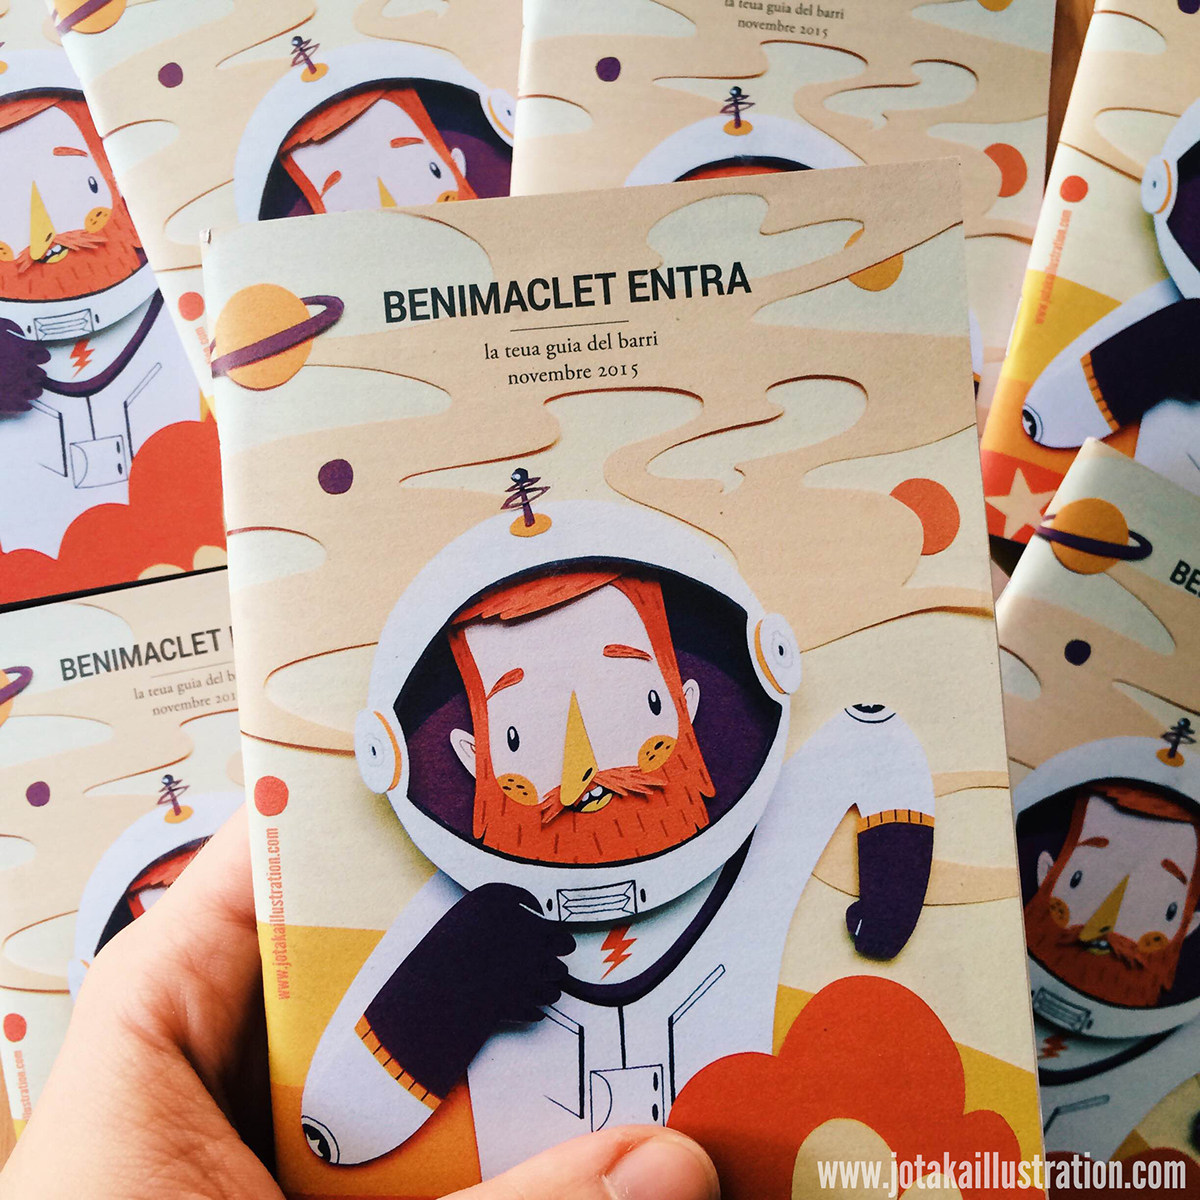 Benimaclet benimacletentra valencia illustracion cover magazine culturalguide